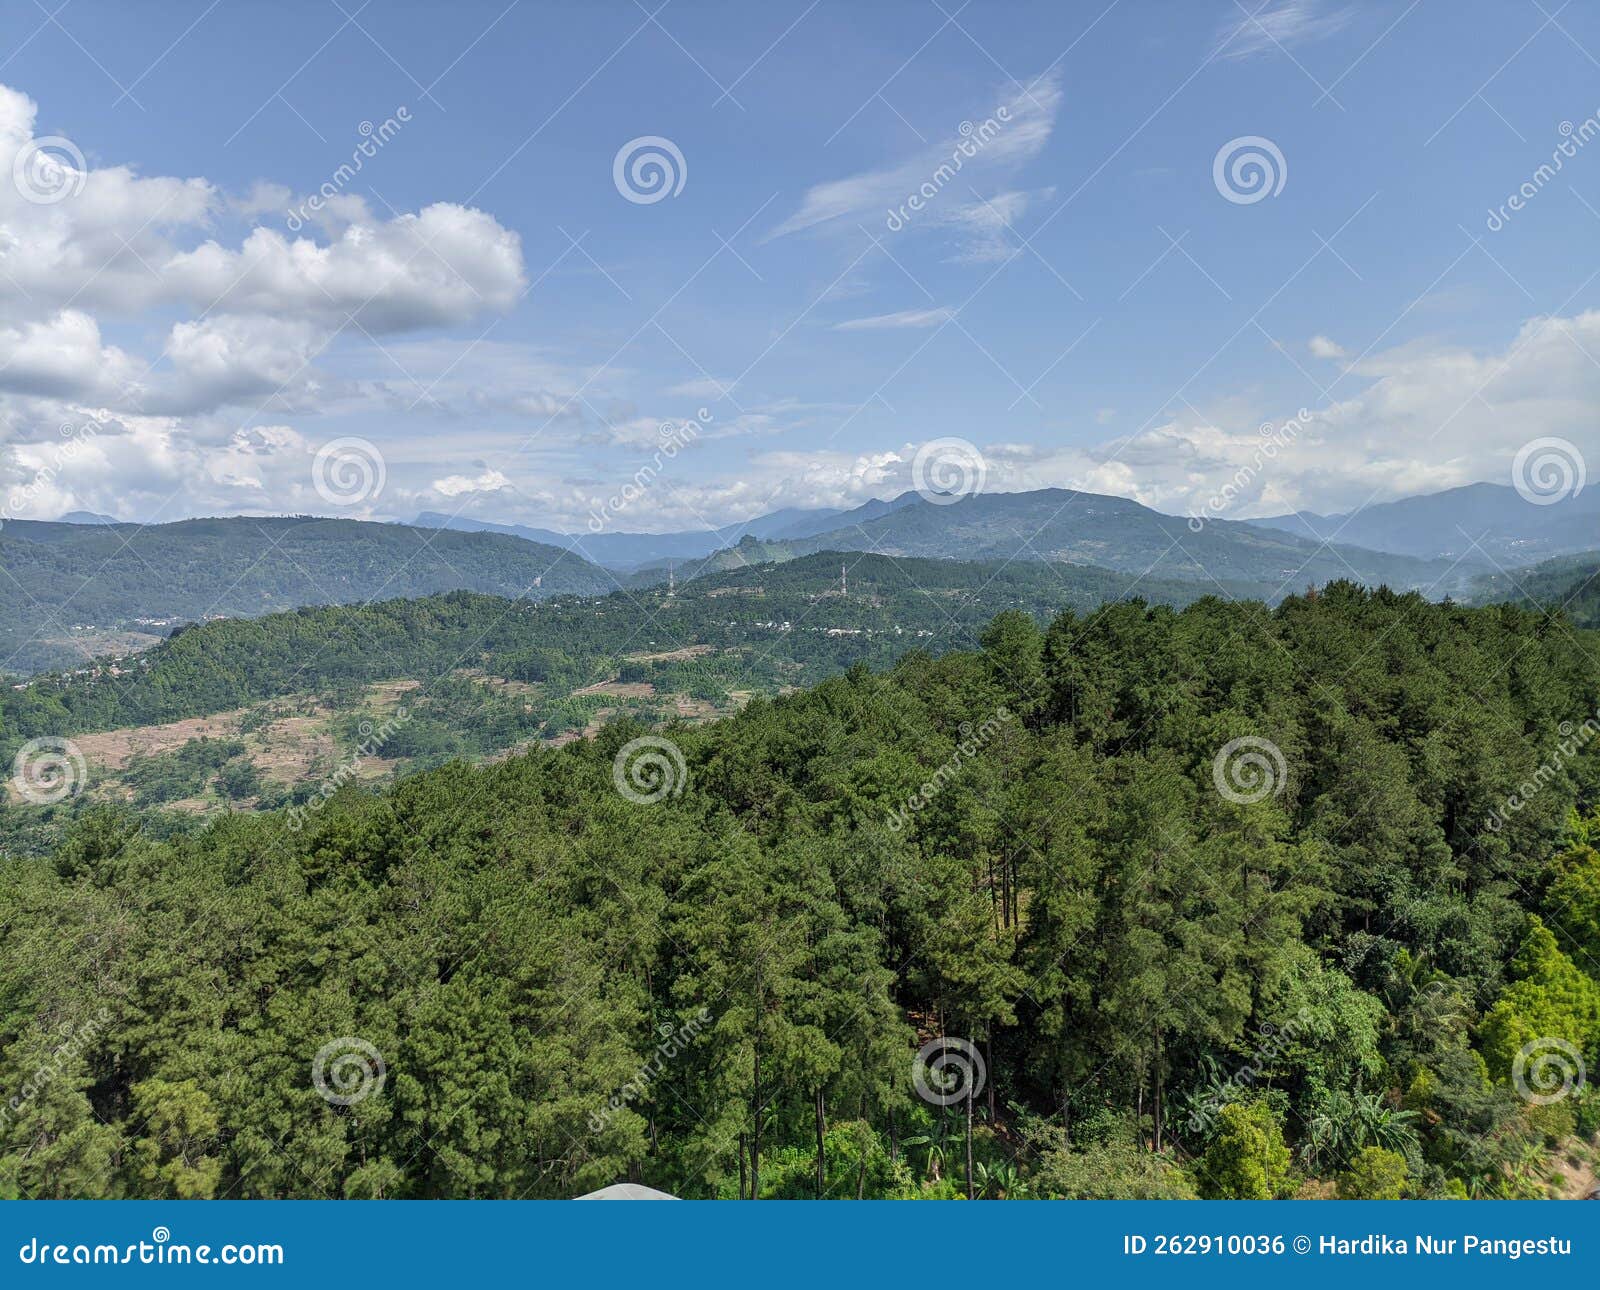 mountain view mountain landscape fotografi forest